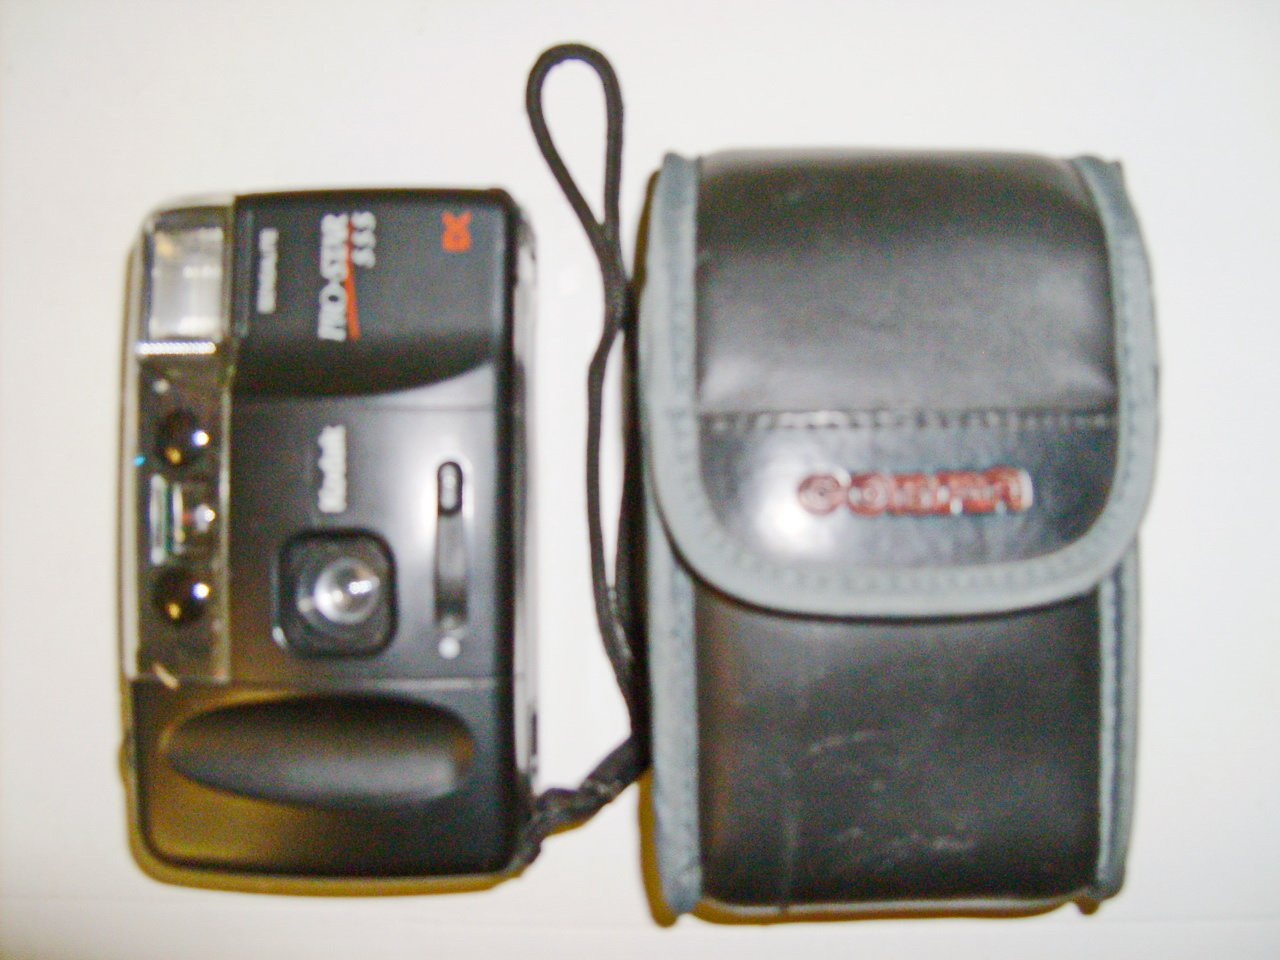 Kodak pro star 111 примеры фото